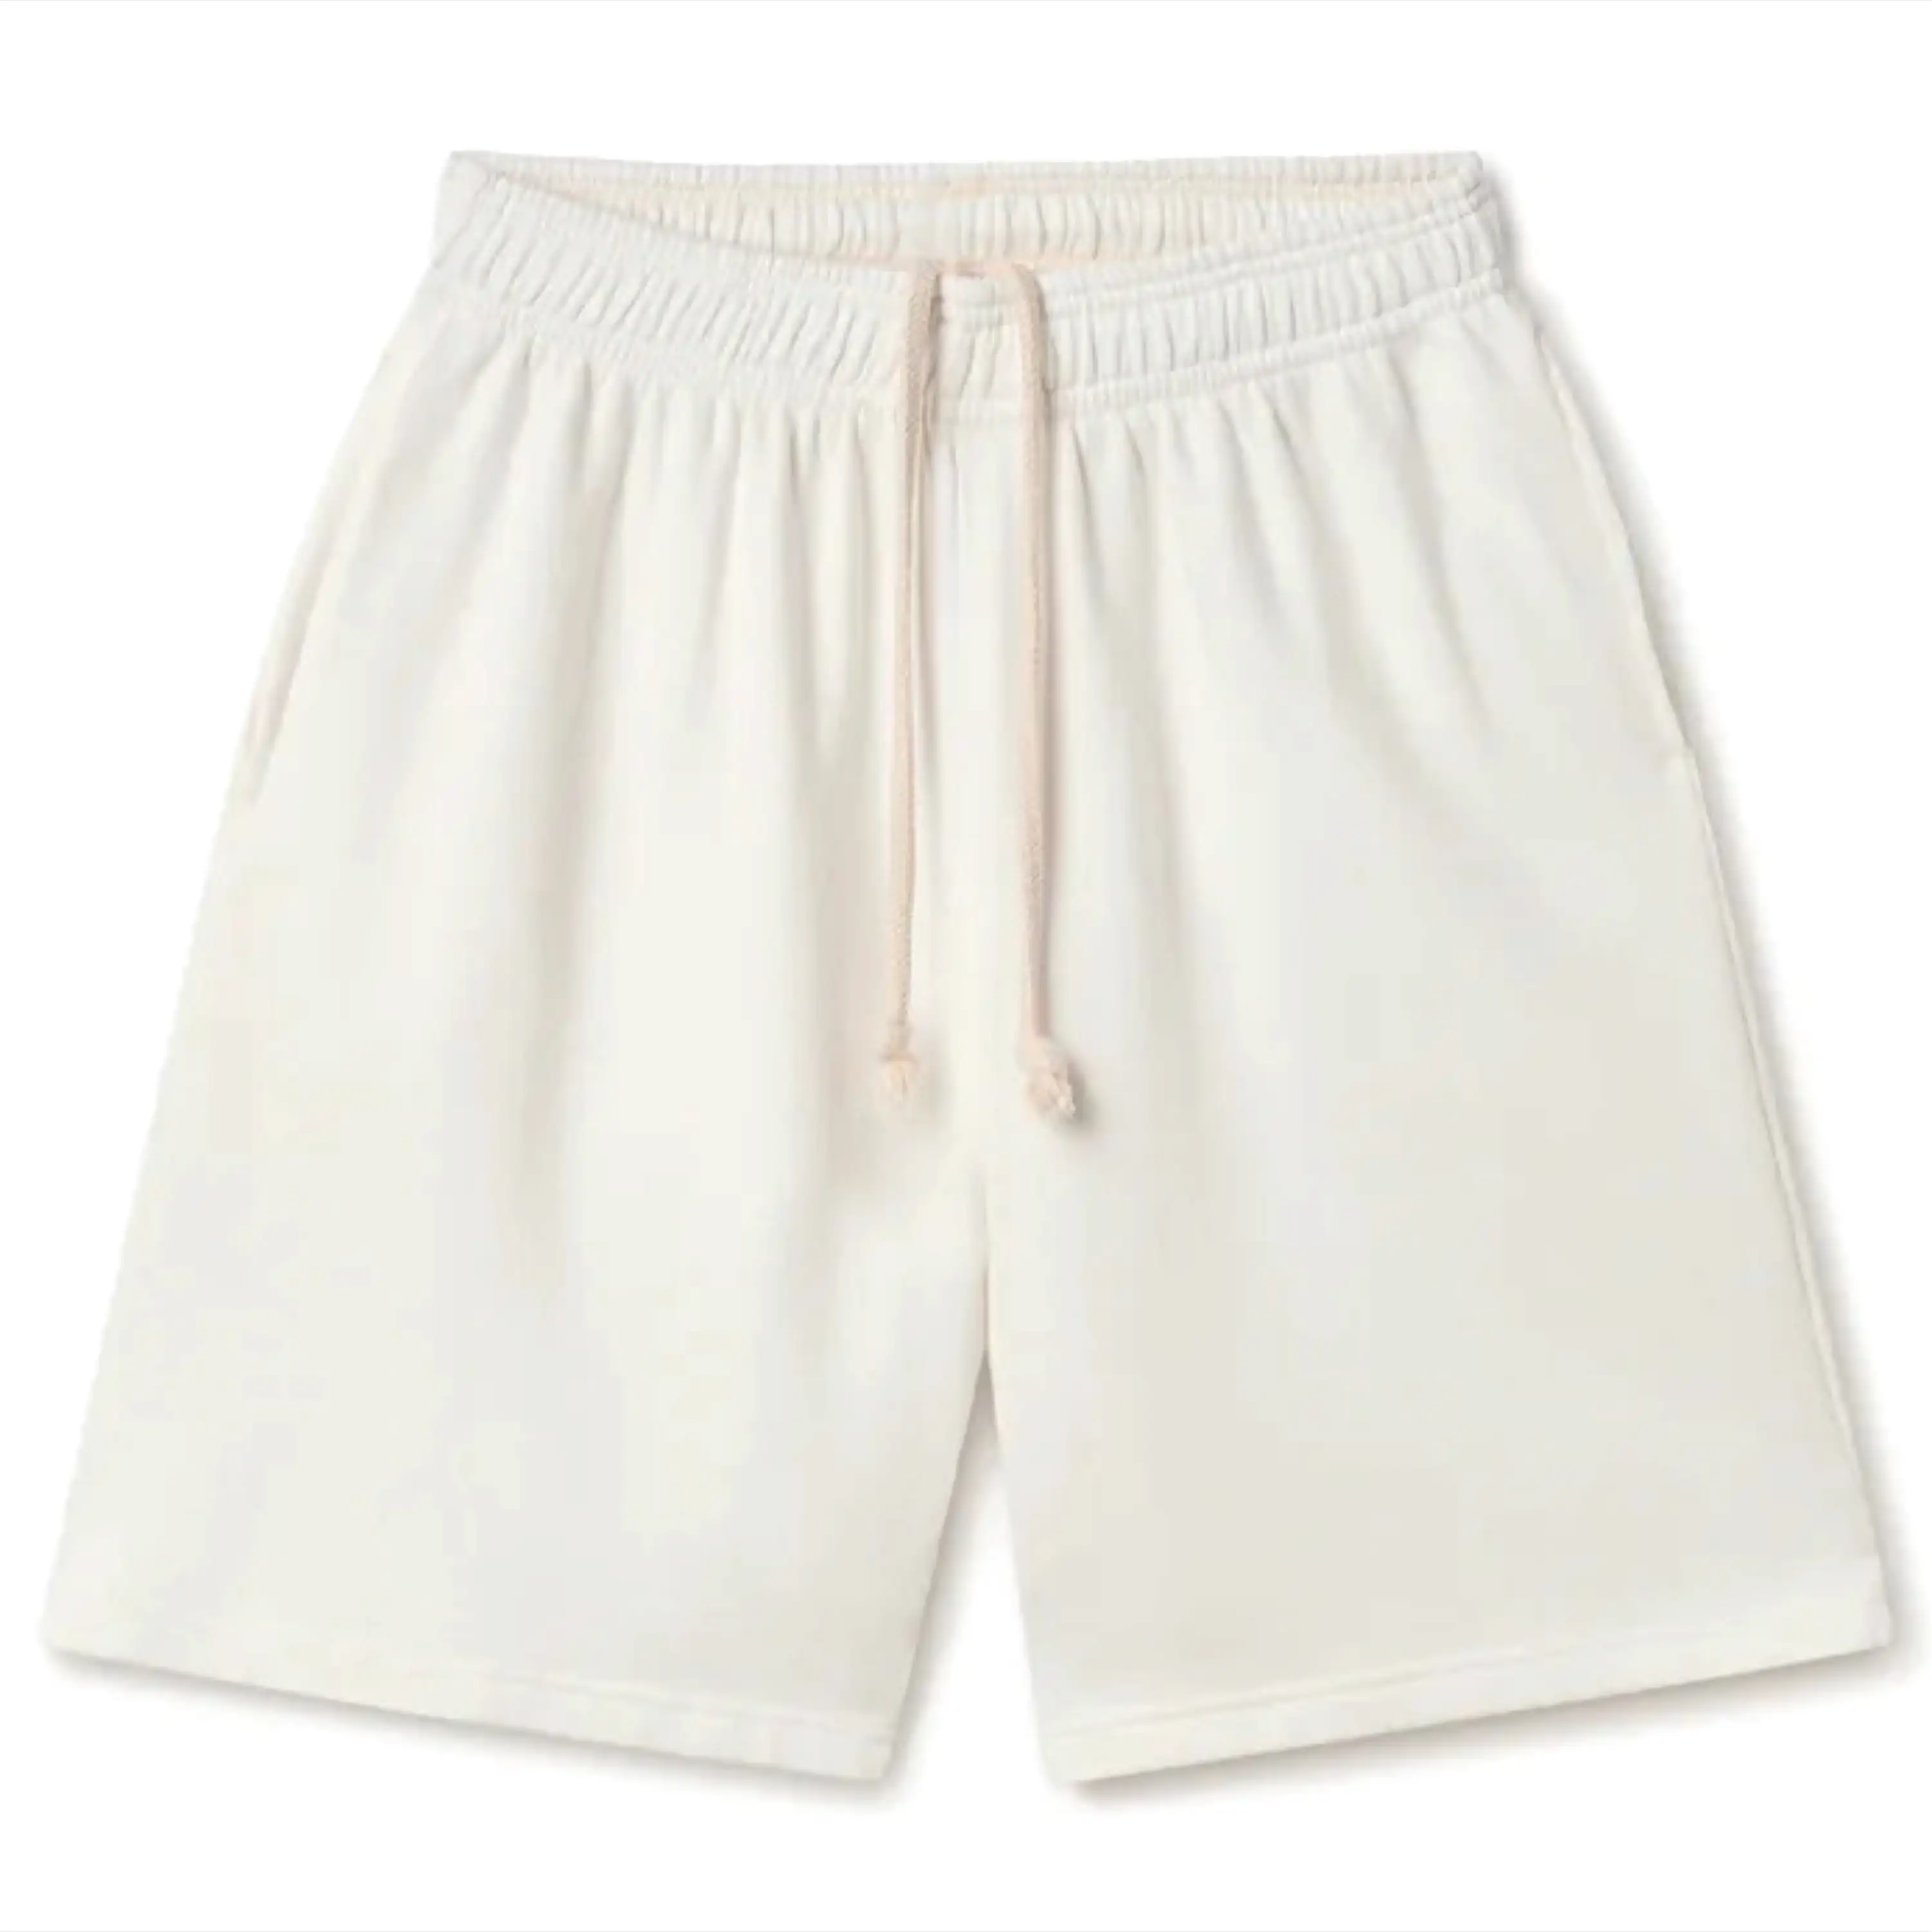 2023 Custom Streetwear Terry Fleece 280g 5 Inch Inseam 100% Cotton Gym Sports Breathable Men's Shorts